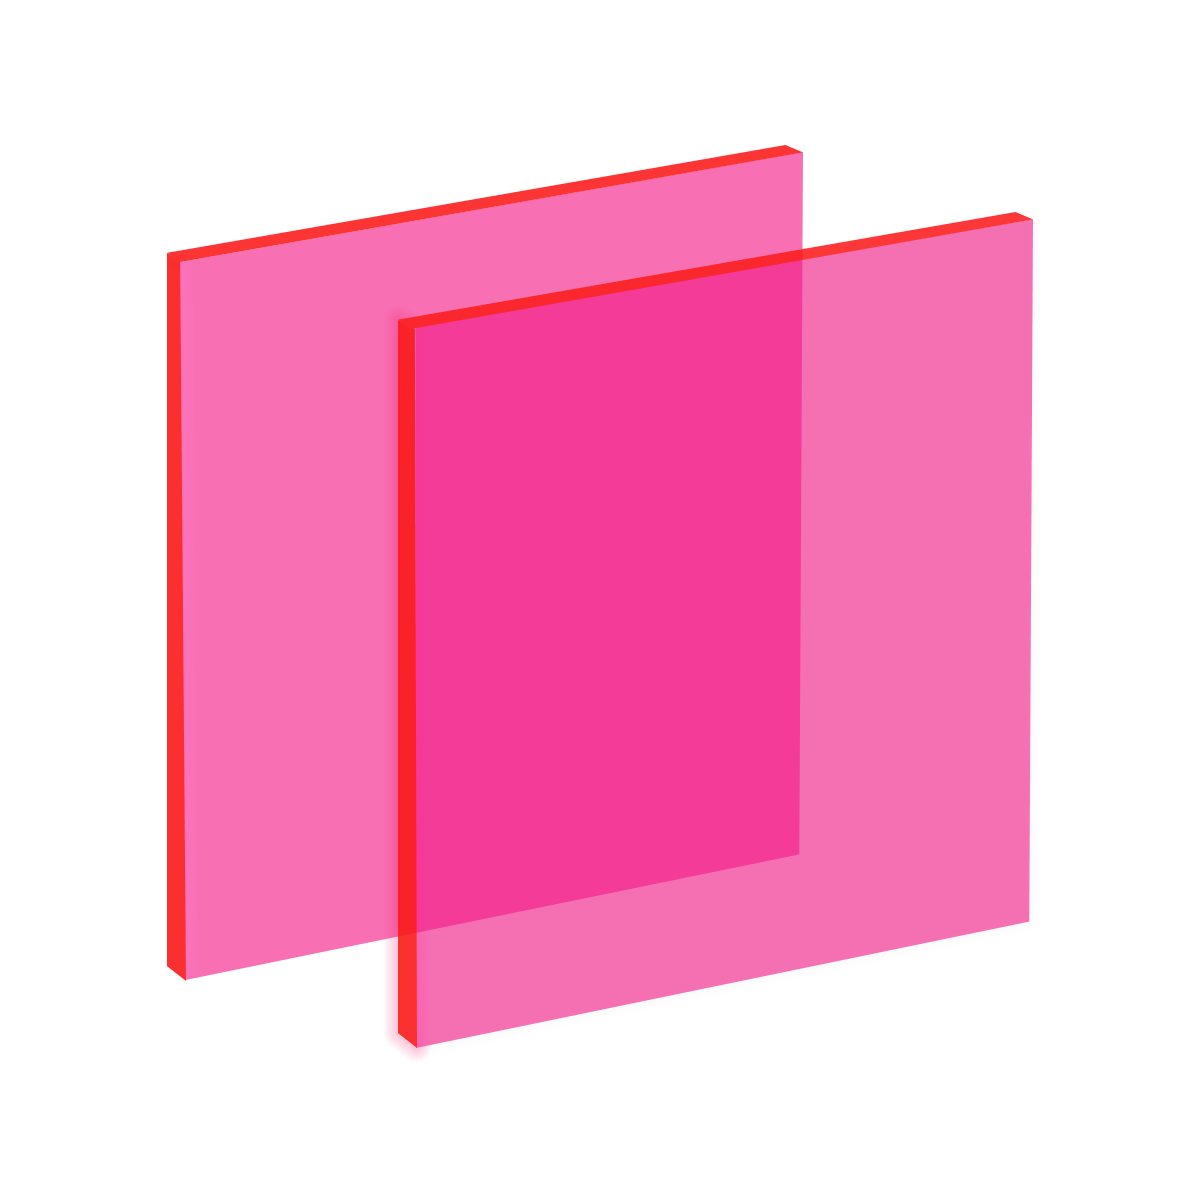 1/8 x 12 x 12 Fluorescent Red Plexiglass Acrylic Sheet